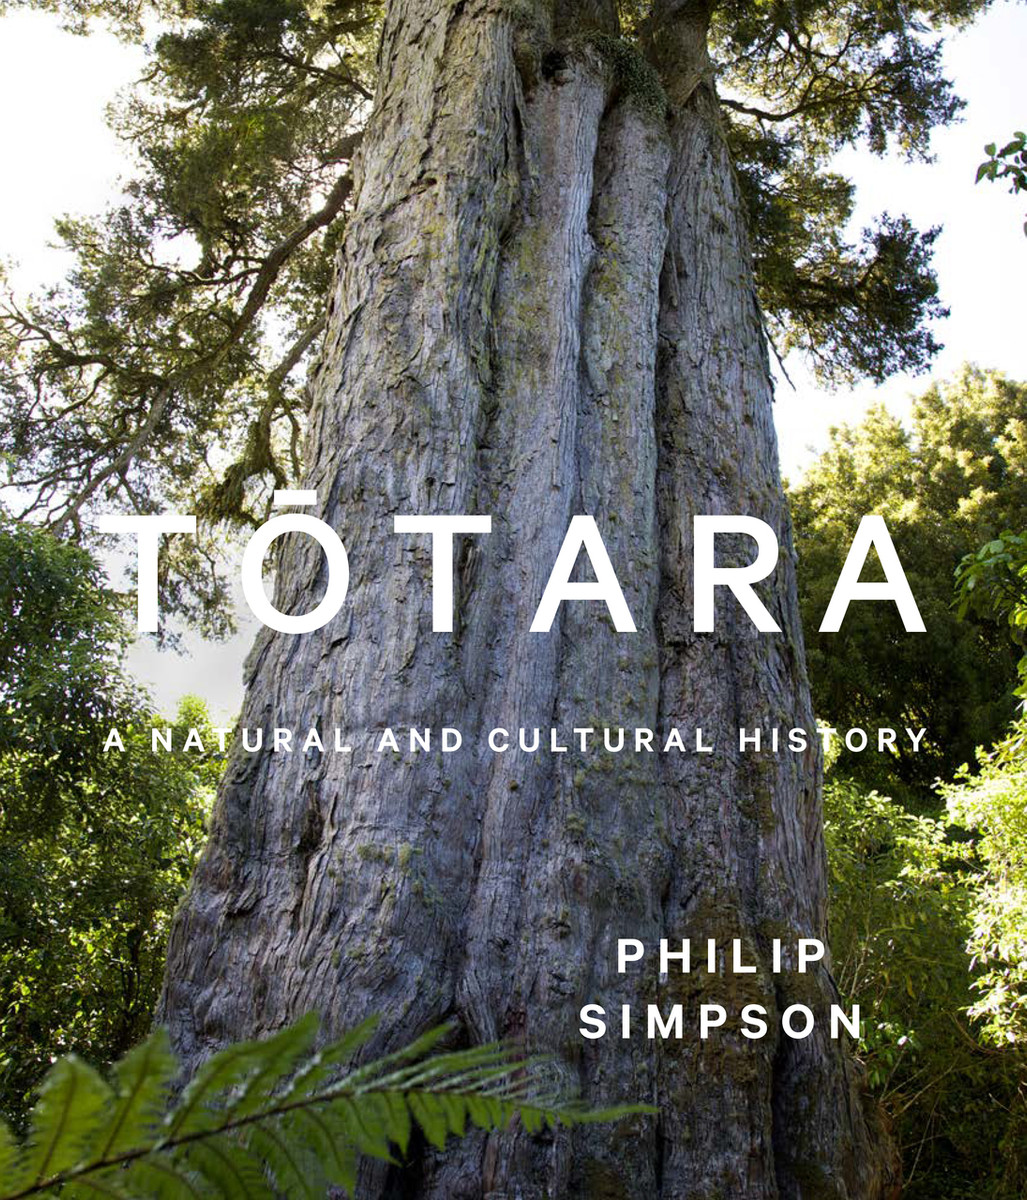 Totara: A Natural and Cultural History by Philip Simpson